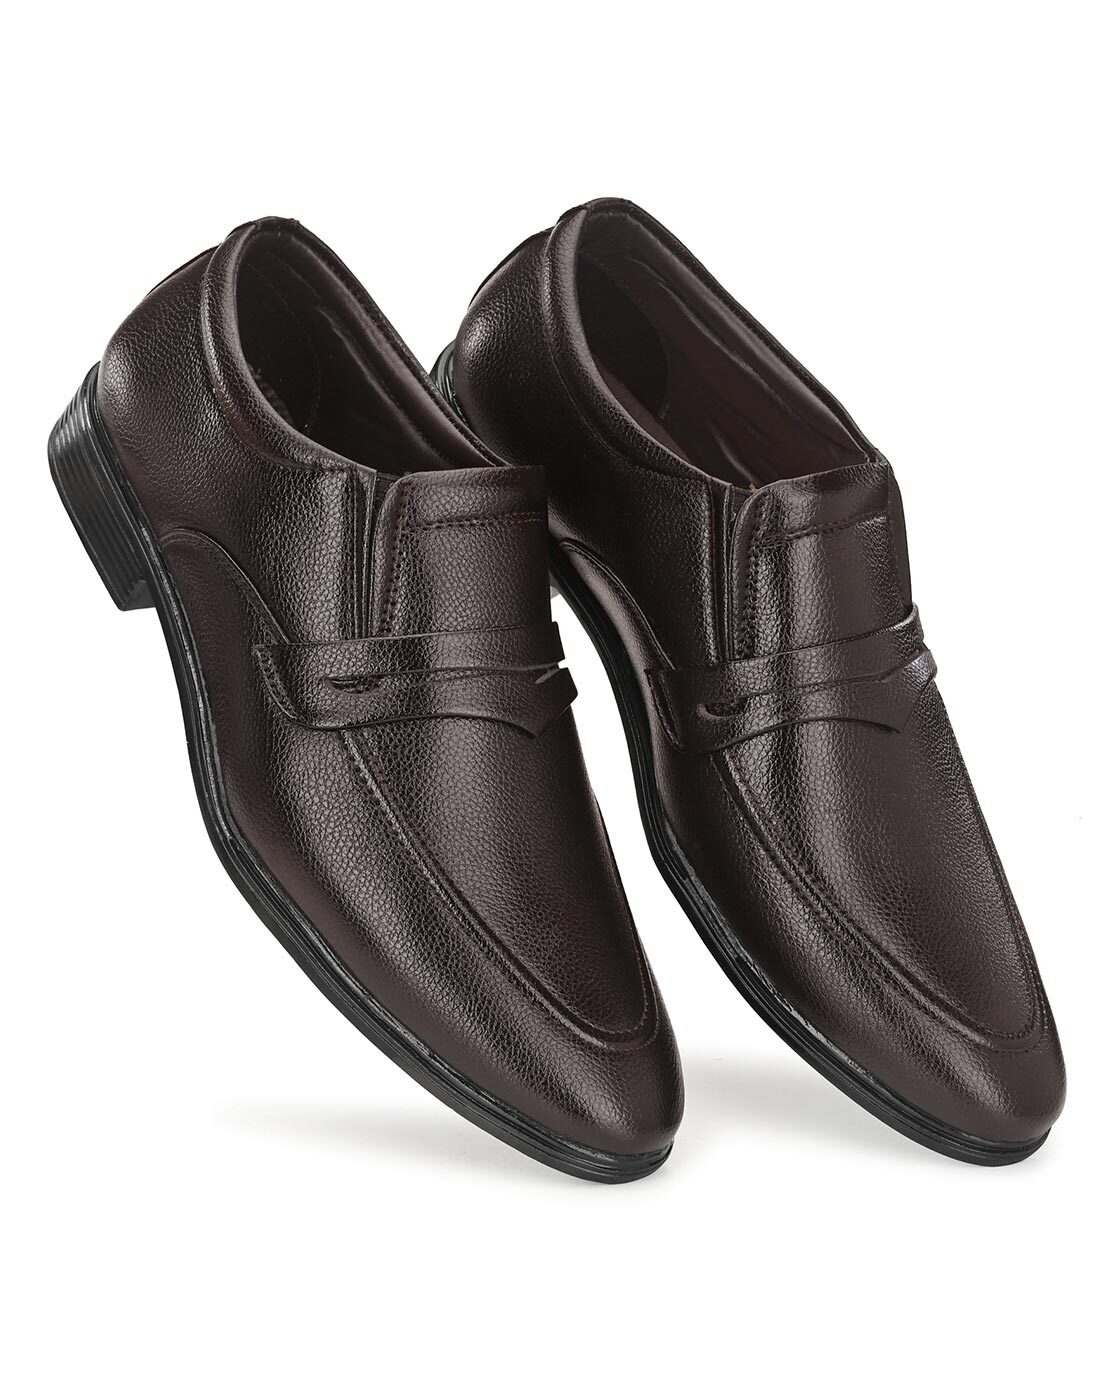 Mens Patent Leather Wedding Dress Formal Shoes For Men Formal Business Suit  For Office 2021 Zapatos De Vestir Hombre From Himalayasstore, $34.18 |  DHgate.Com